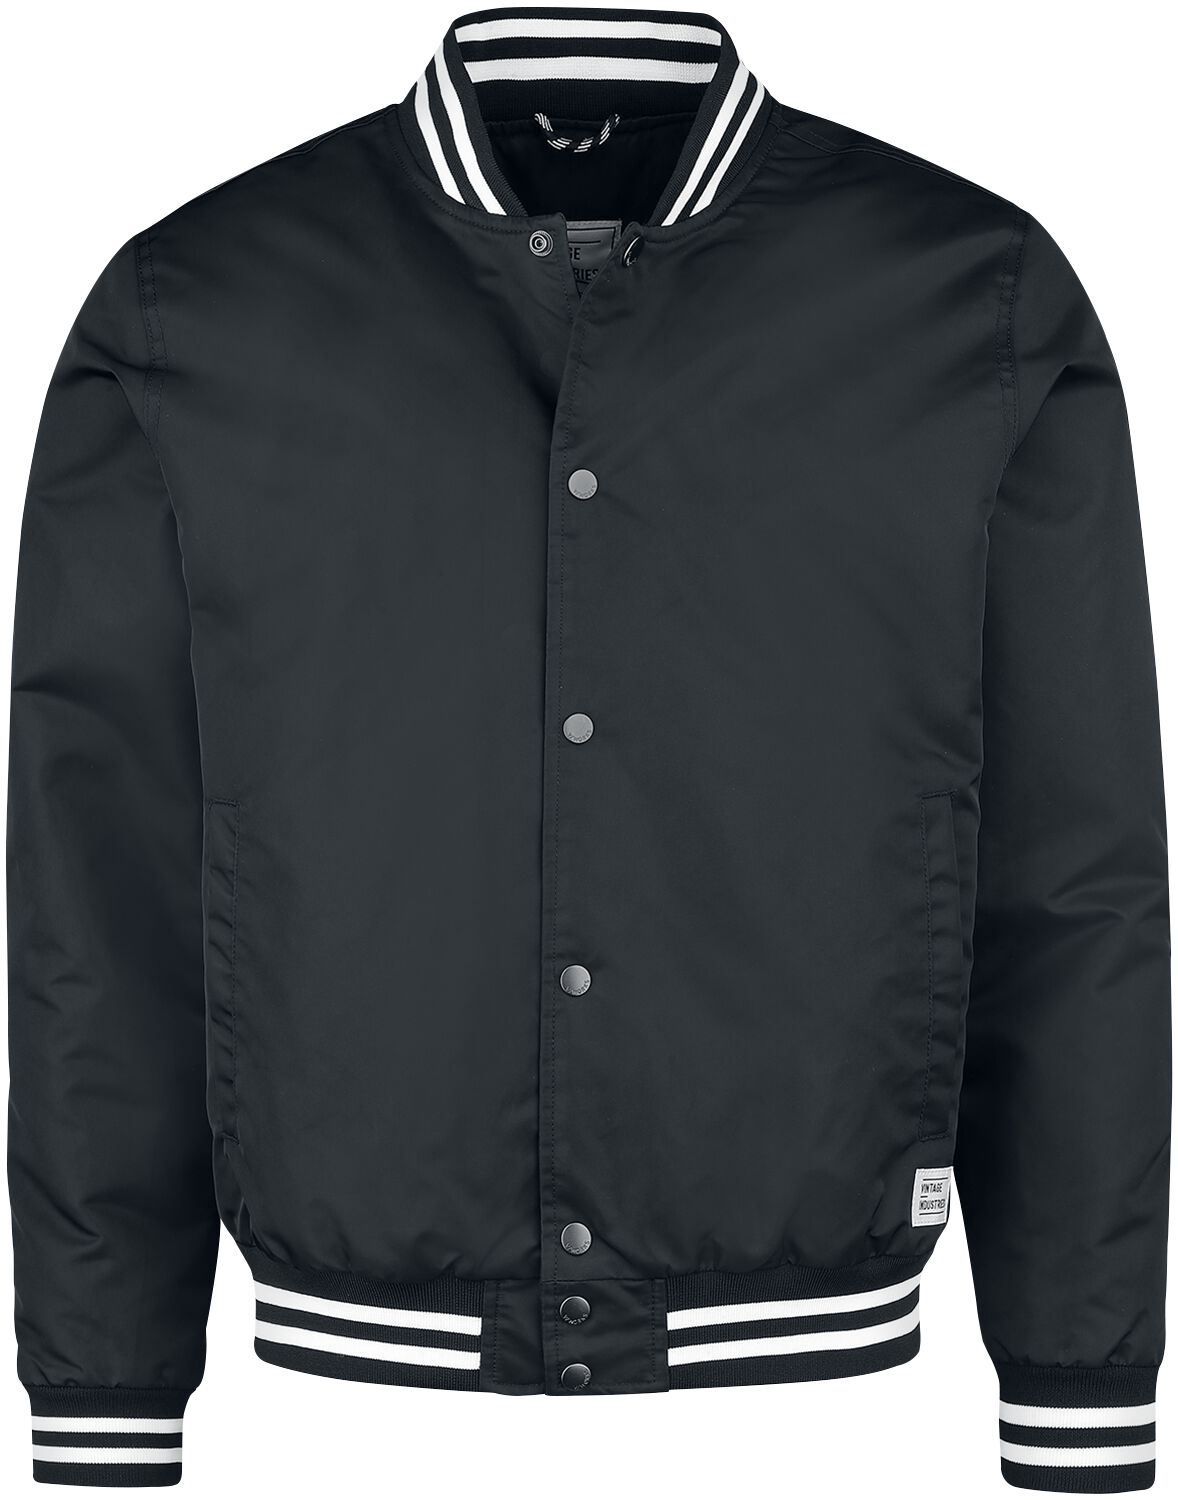 Vintage Industries Chapman Jacket Übergangsjacke schwarz in XXL